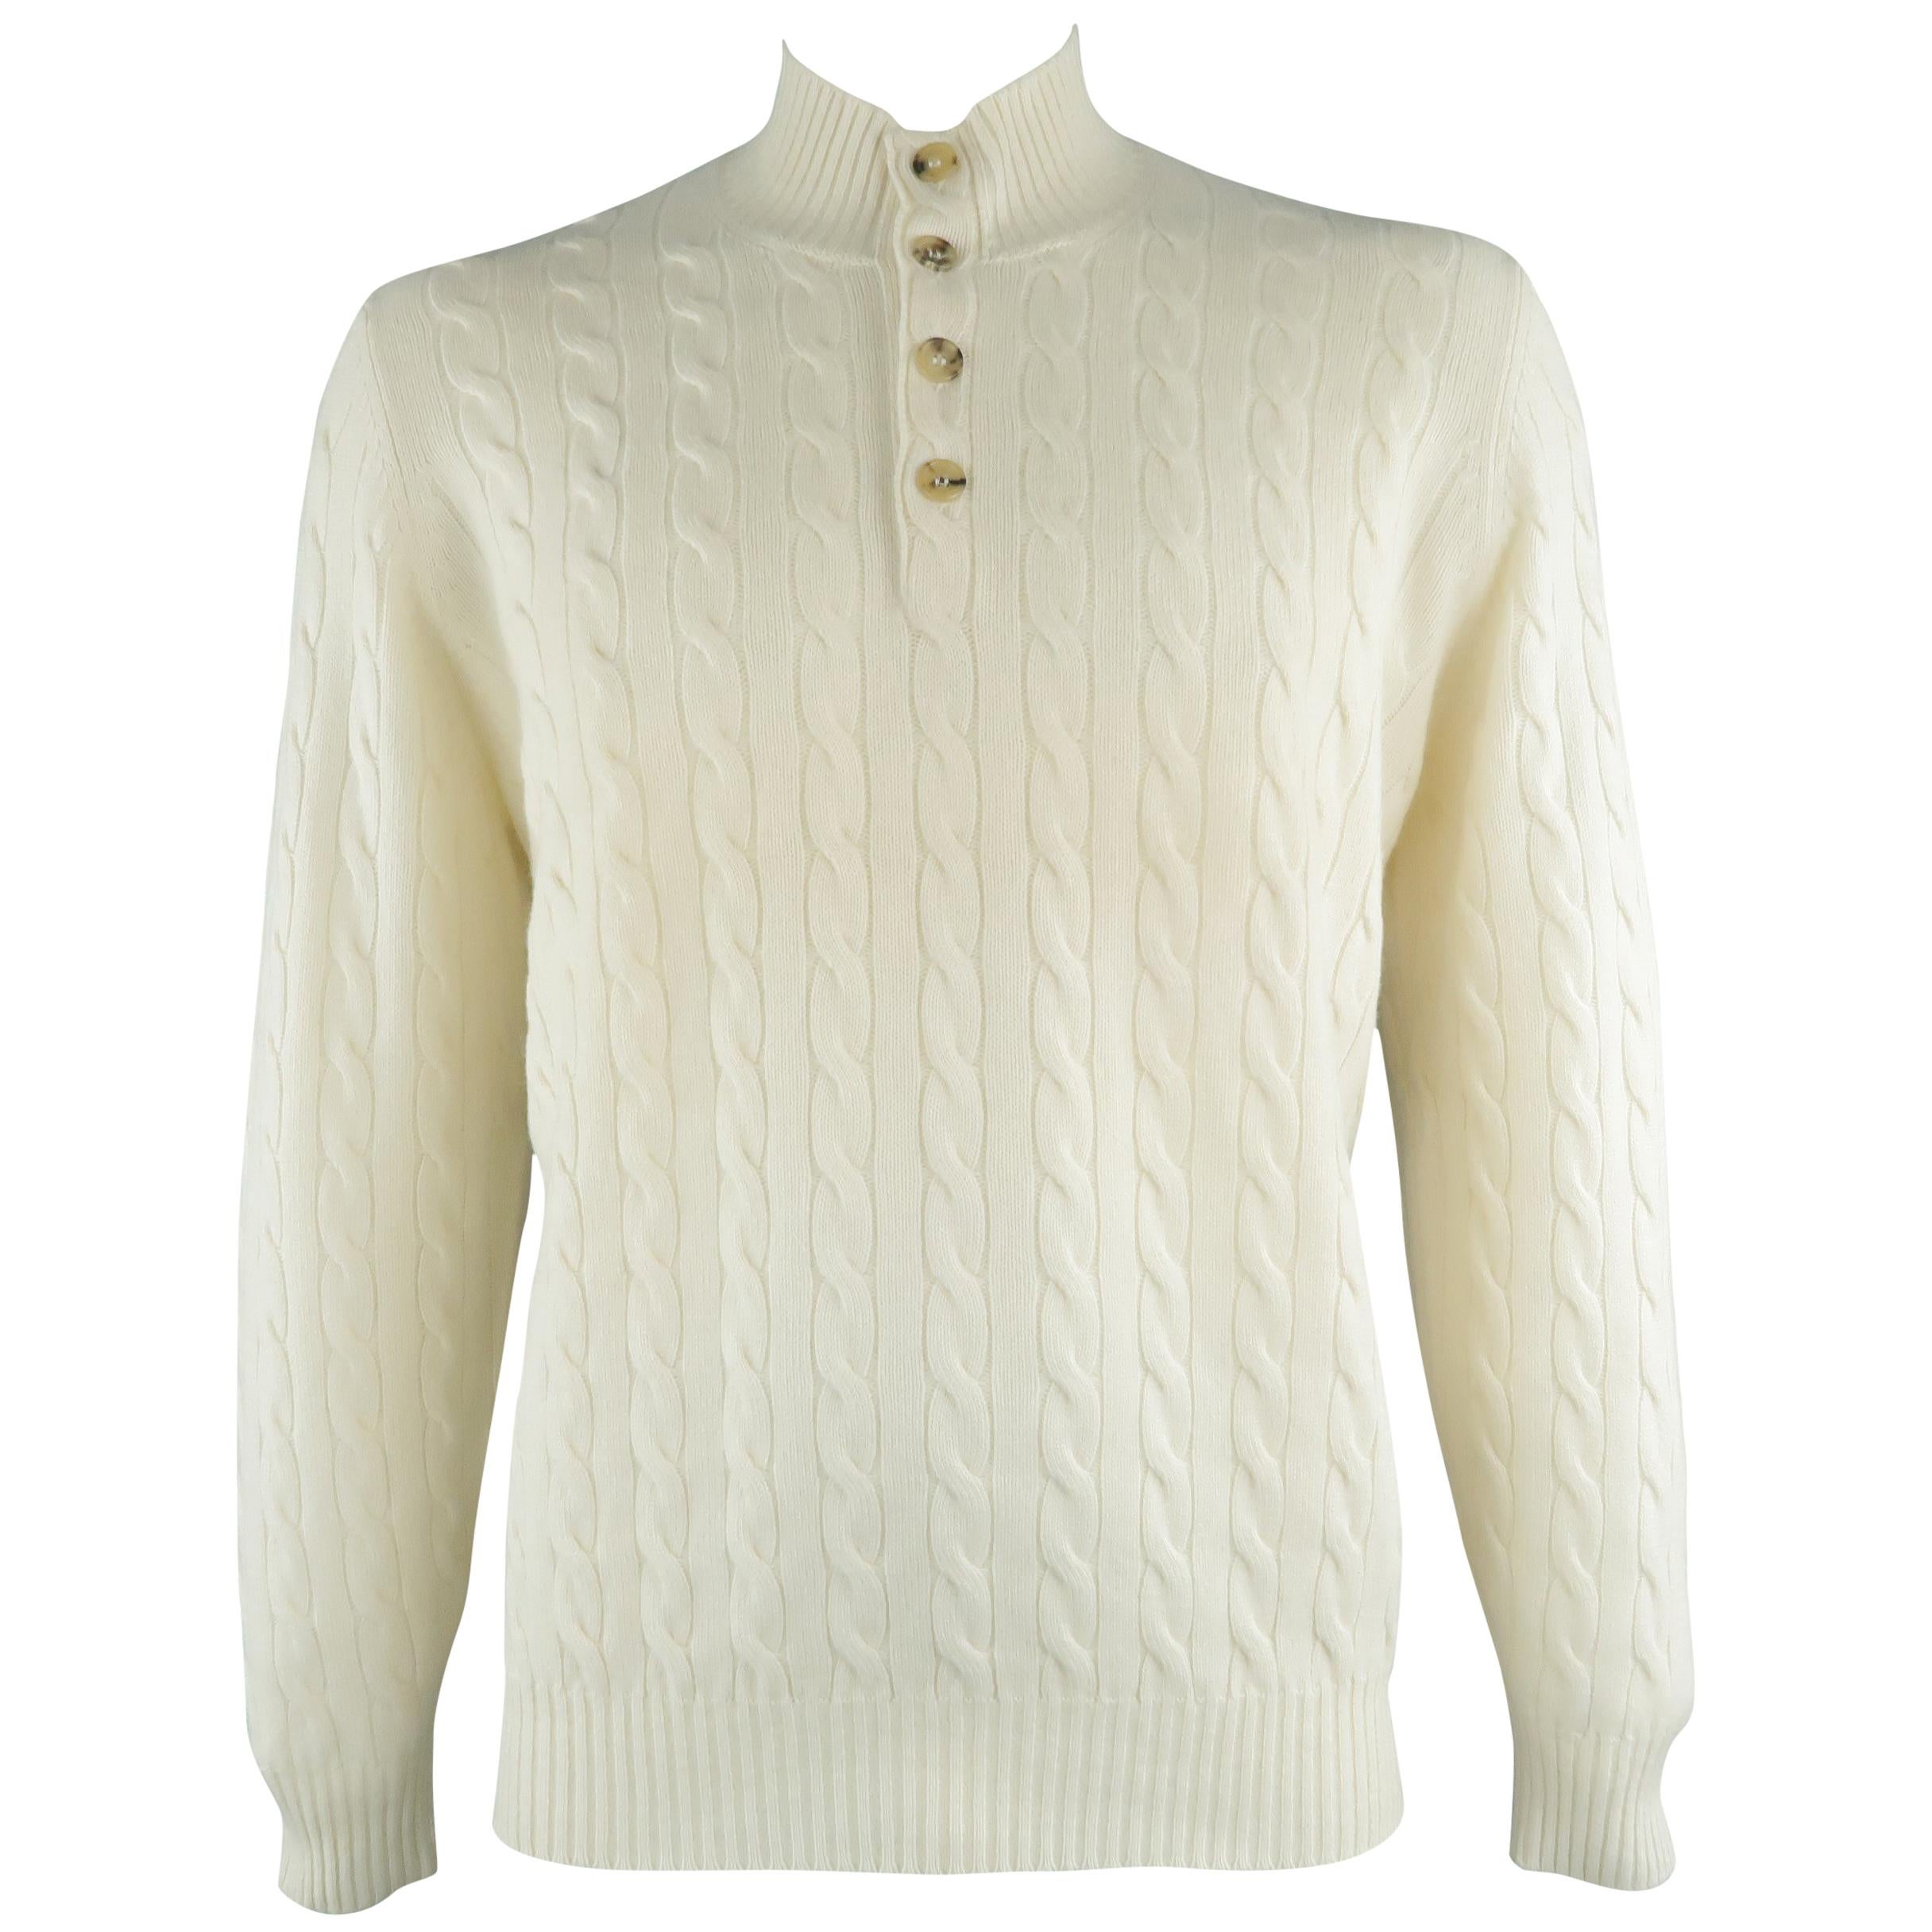 BRUNELLO CUCINELLI Size 44 Cream Cable Knit Cashmere Henley Sweater